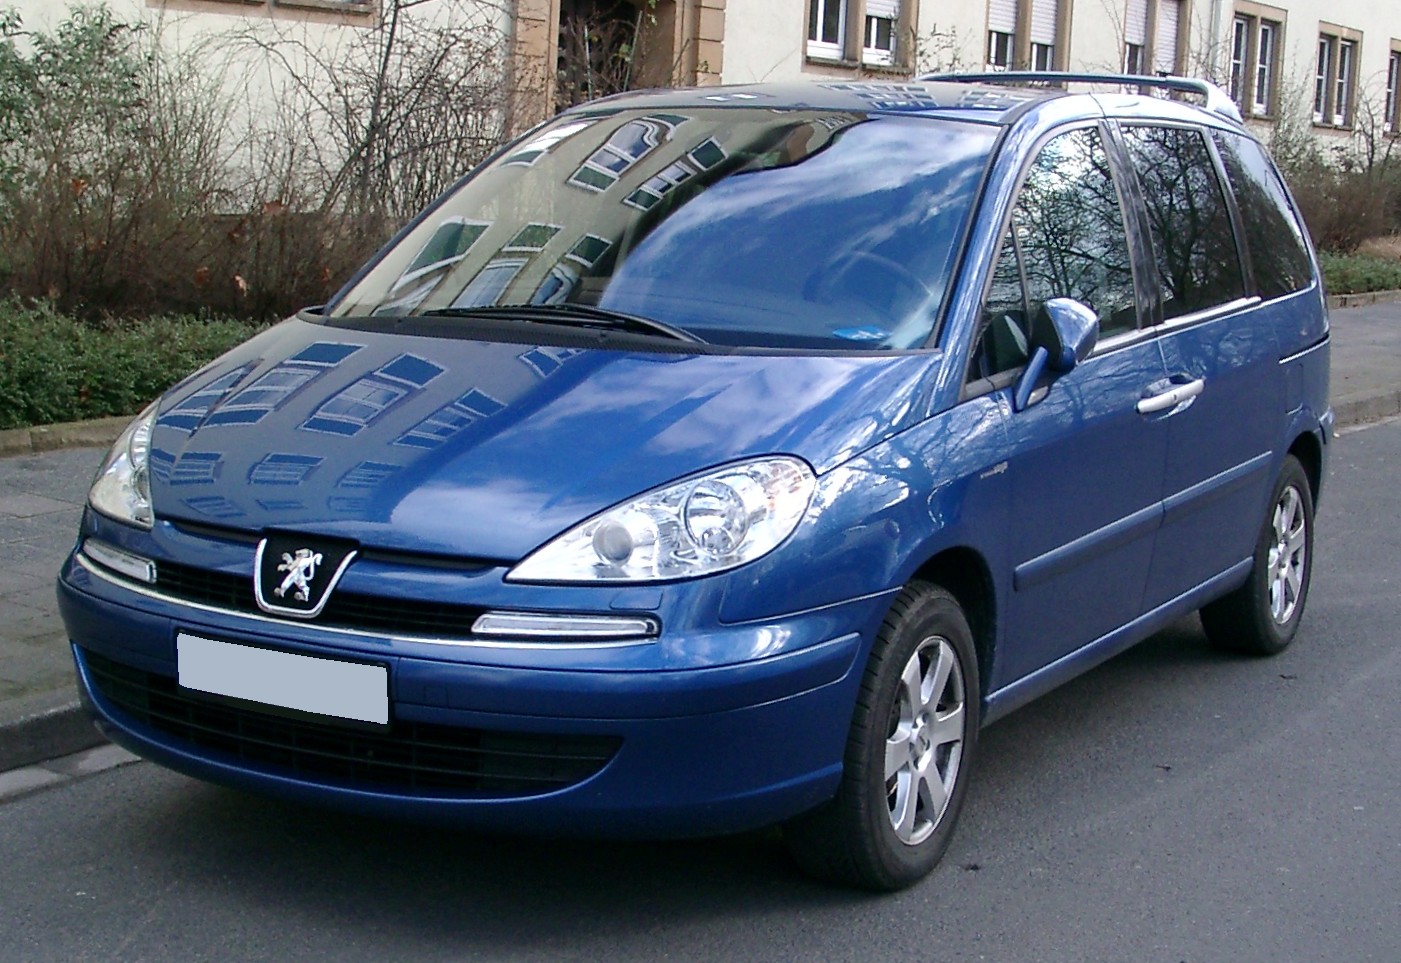 File:Citroën C4 Picasso rear 20100529.jpg - Wikimedia Commons